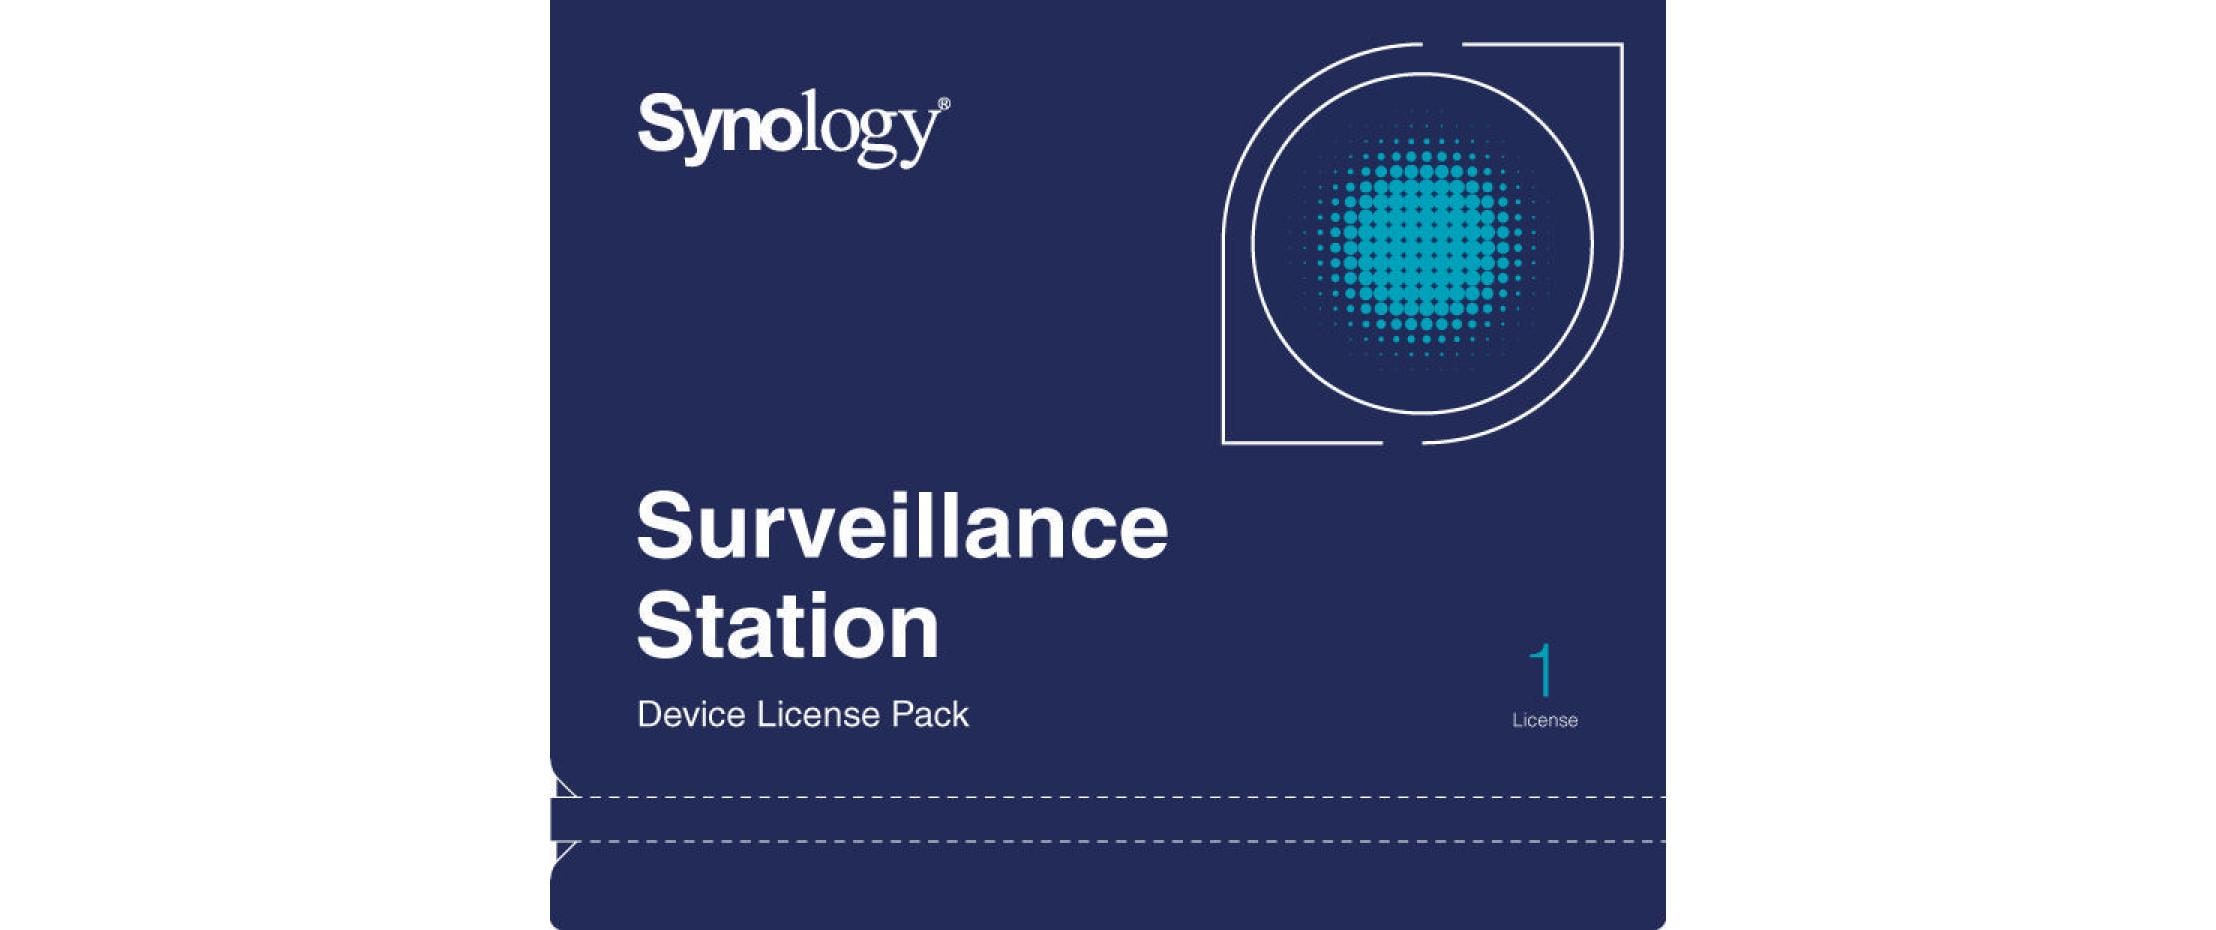 Synology Lizenz Surveillance 1 zusätzliche Kamera